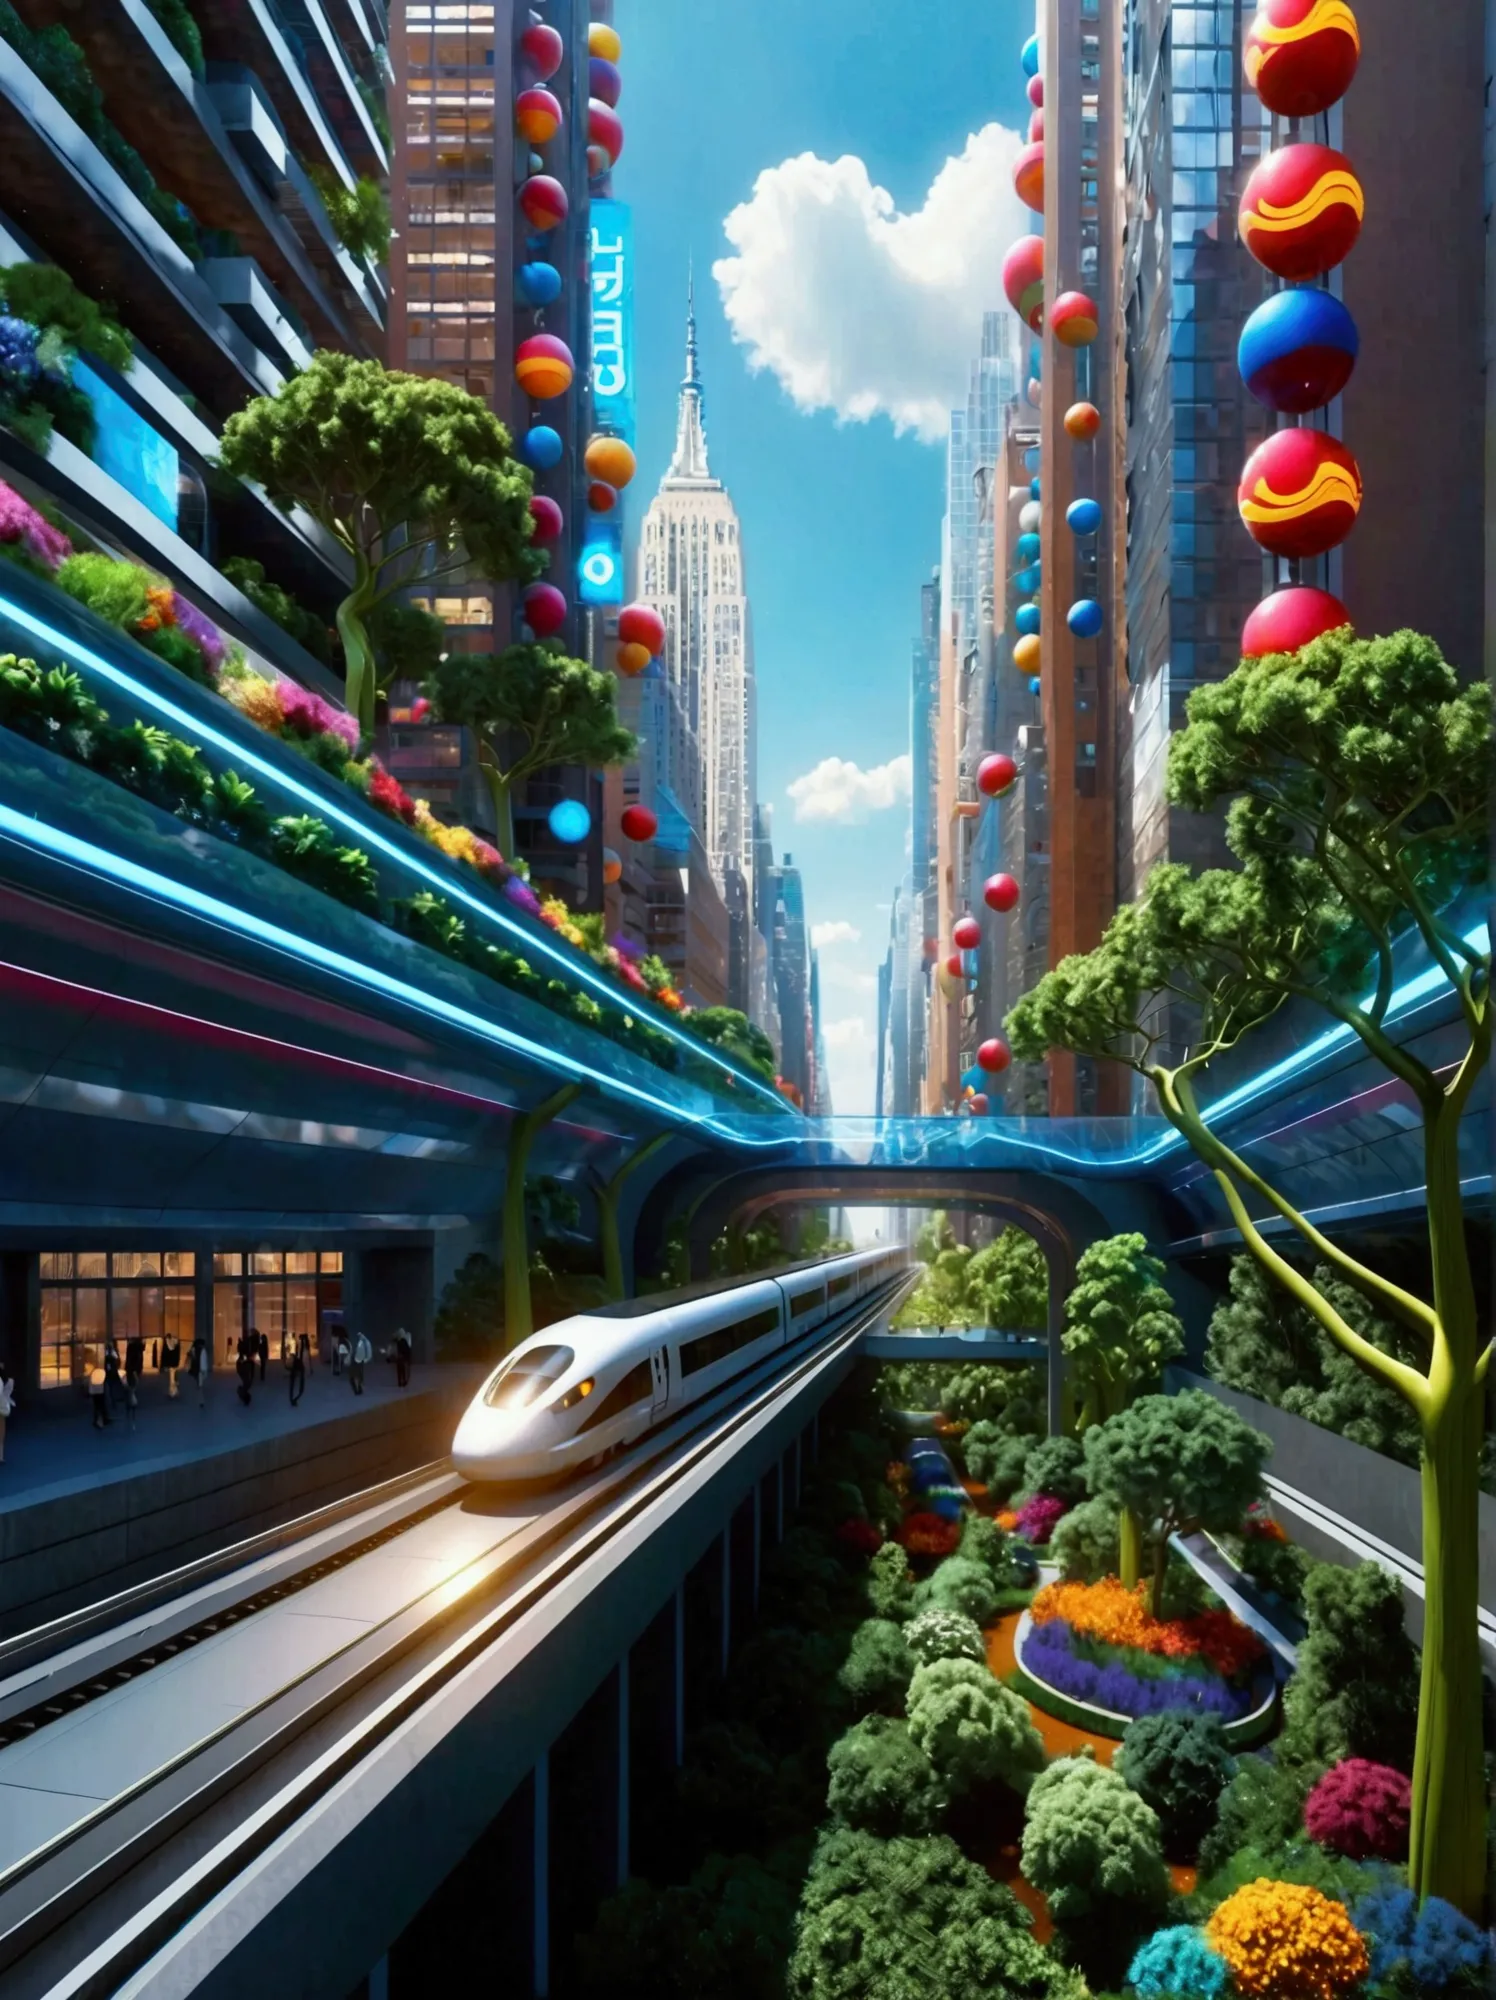 Cidade futuristica, 24th century, skyscrapper, nanomaterials, streamlined line design, Road system, Maglev train, trpical garden...